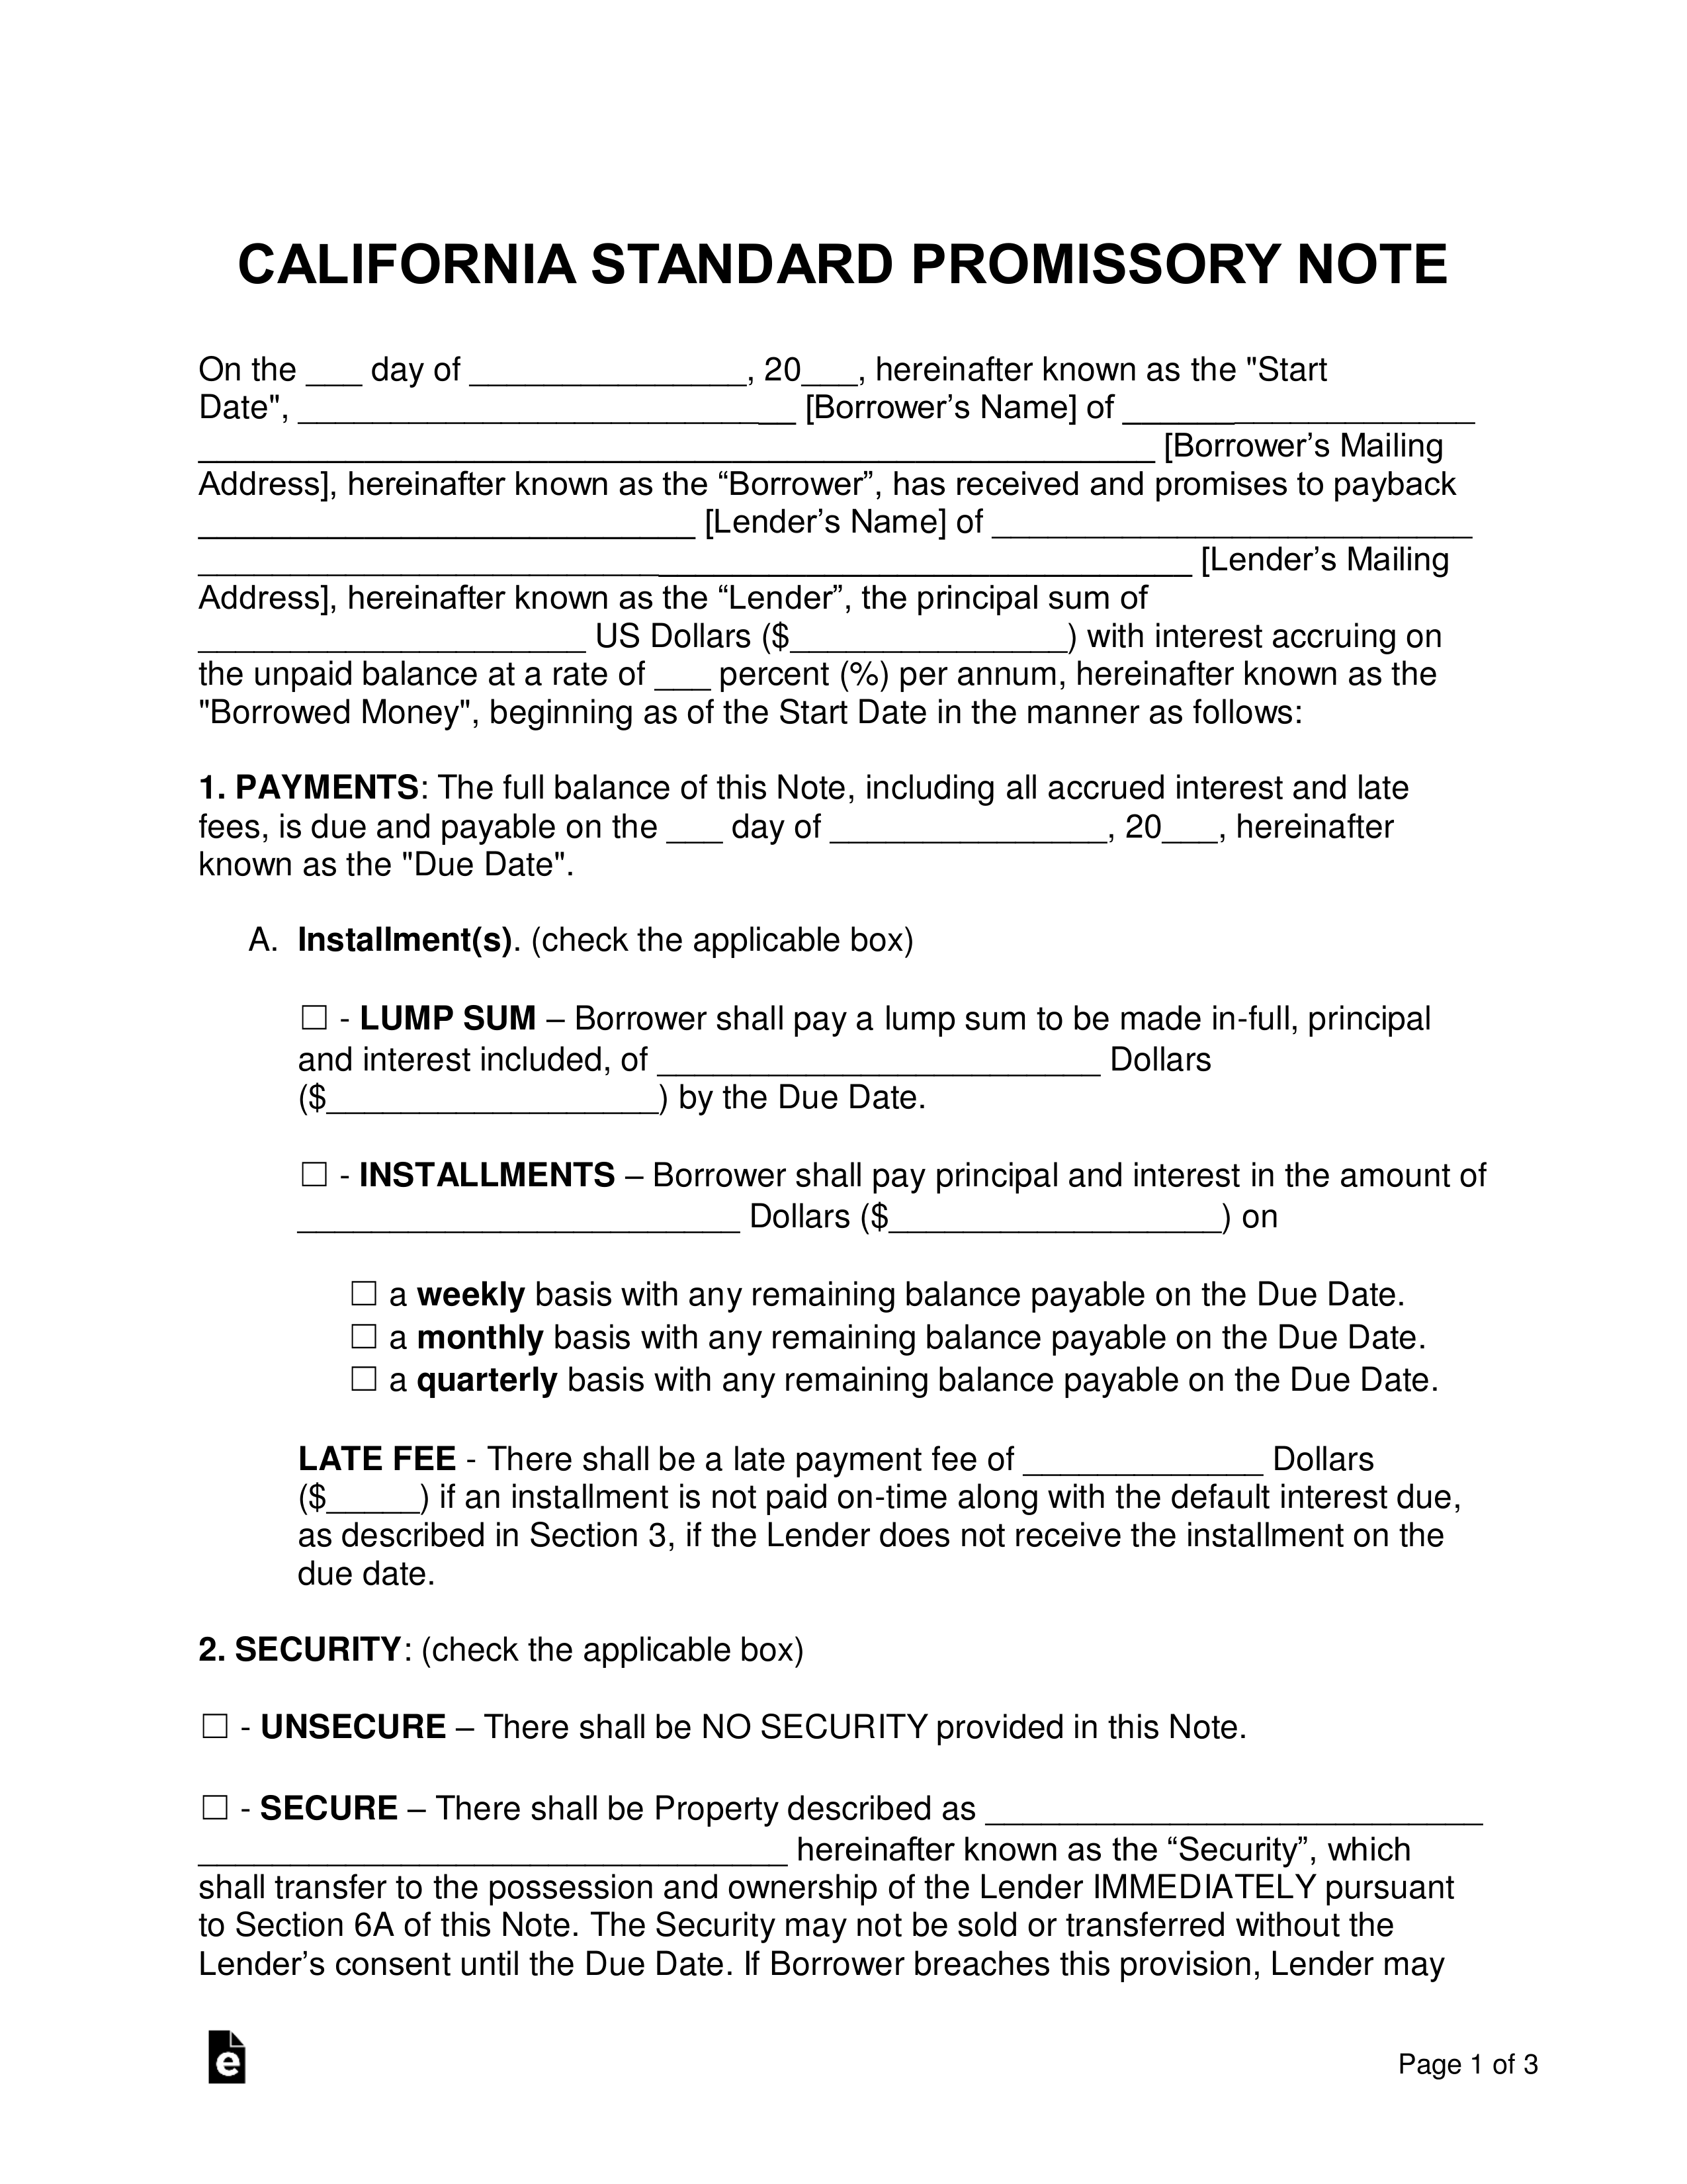 California Promissory Note Templates (2)